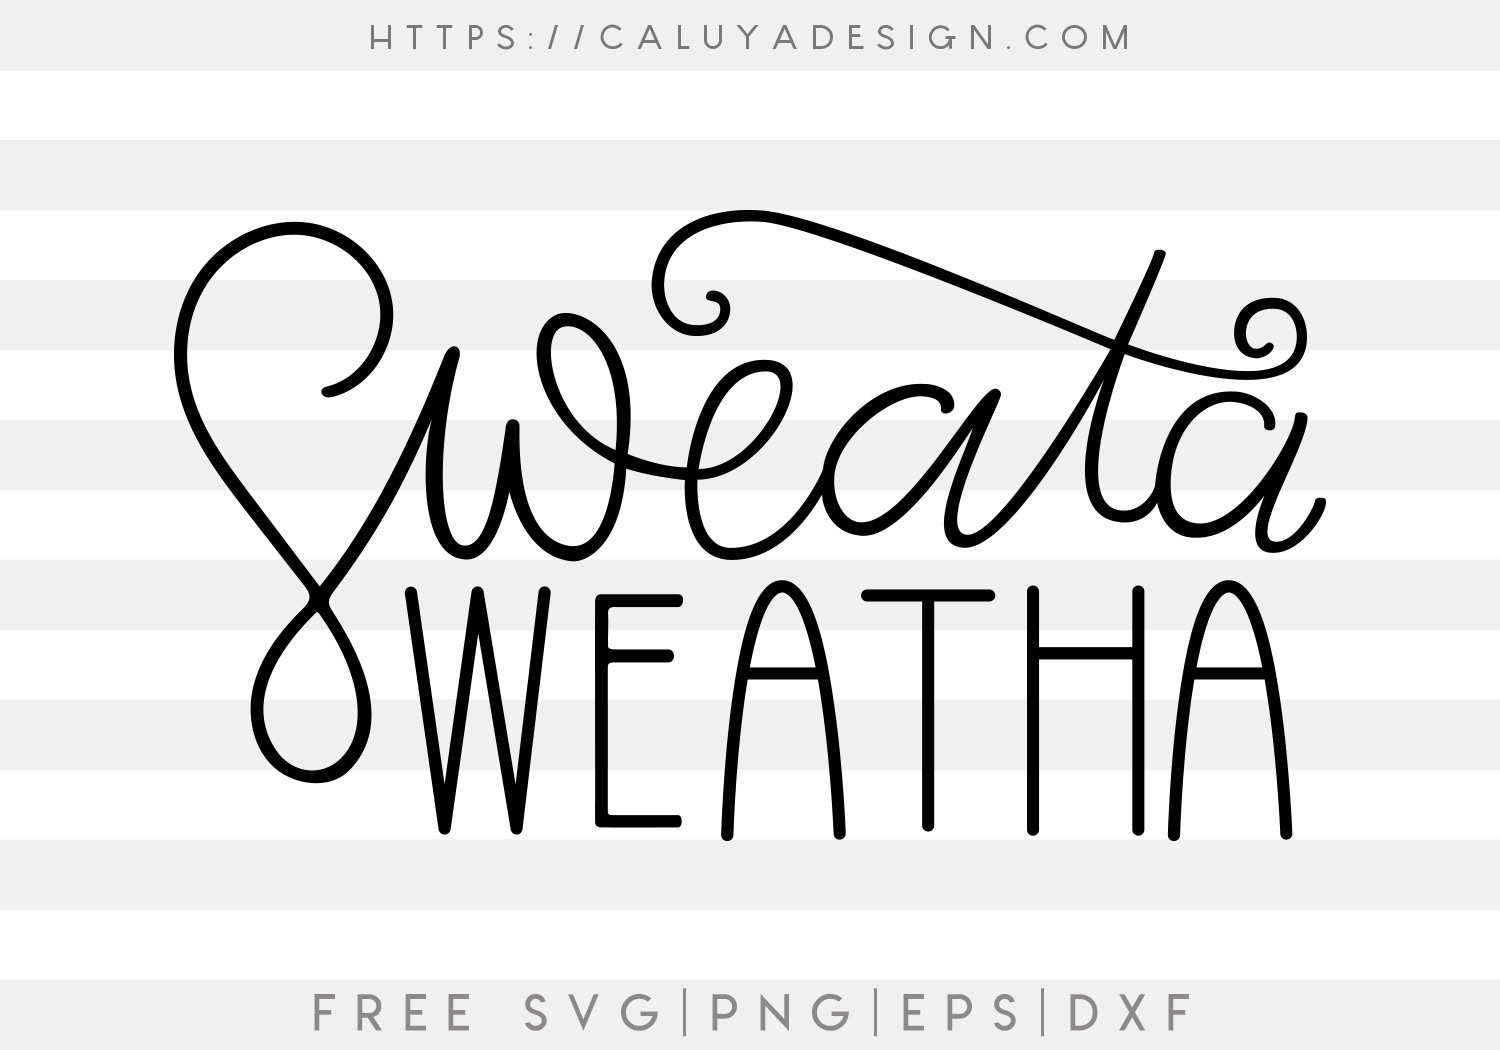 Free Sweata Weatha SVG Cut File